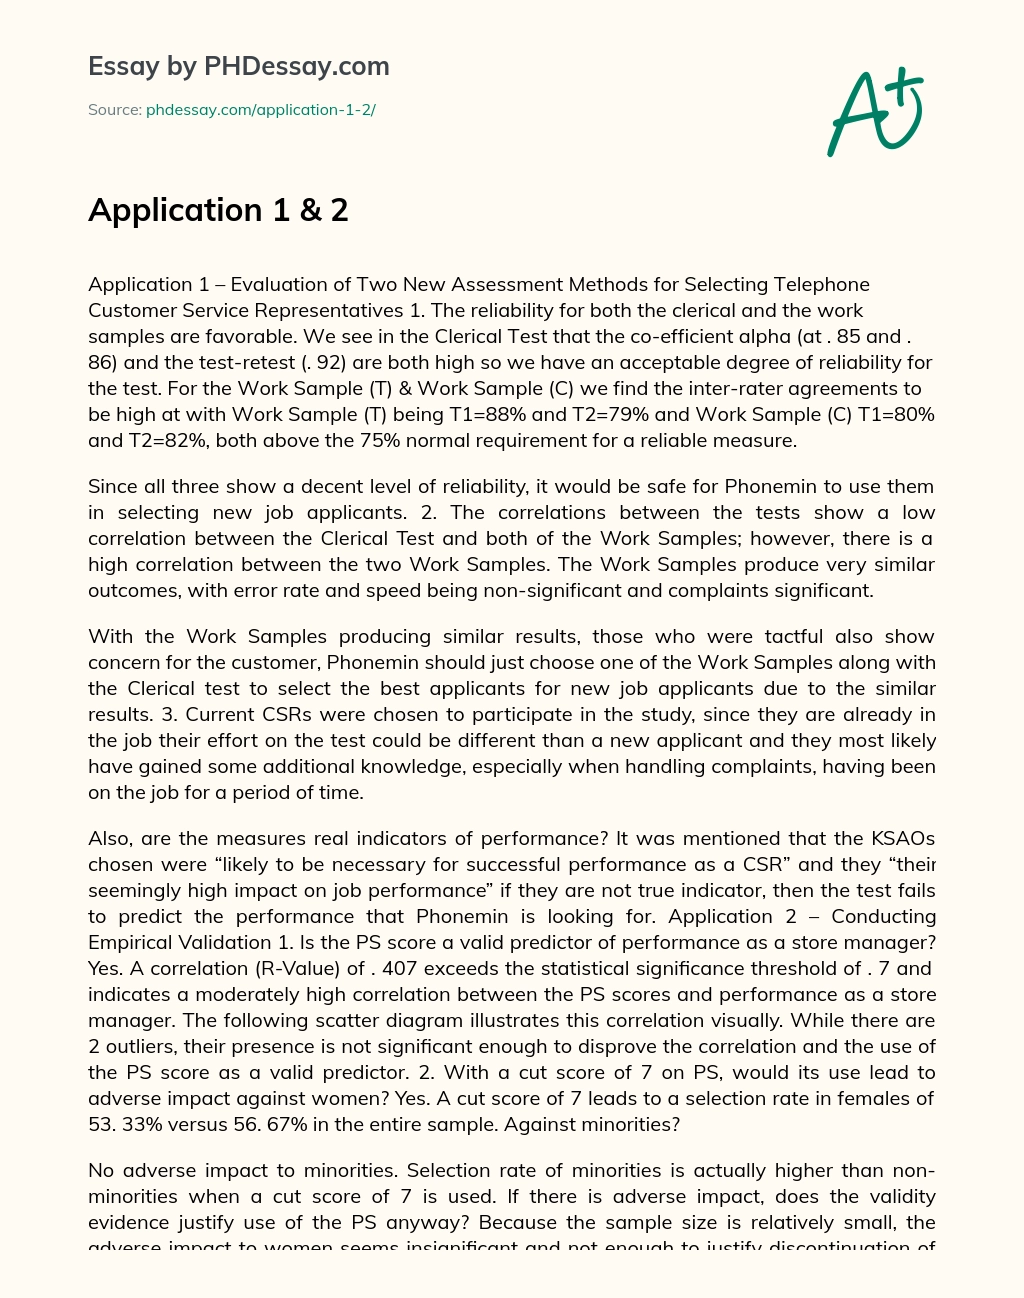 Application 1 & 2 essay